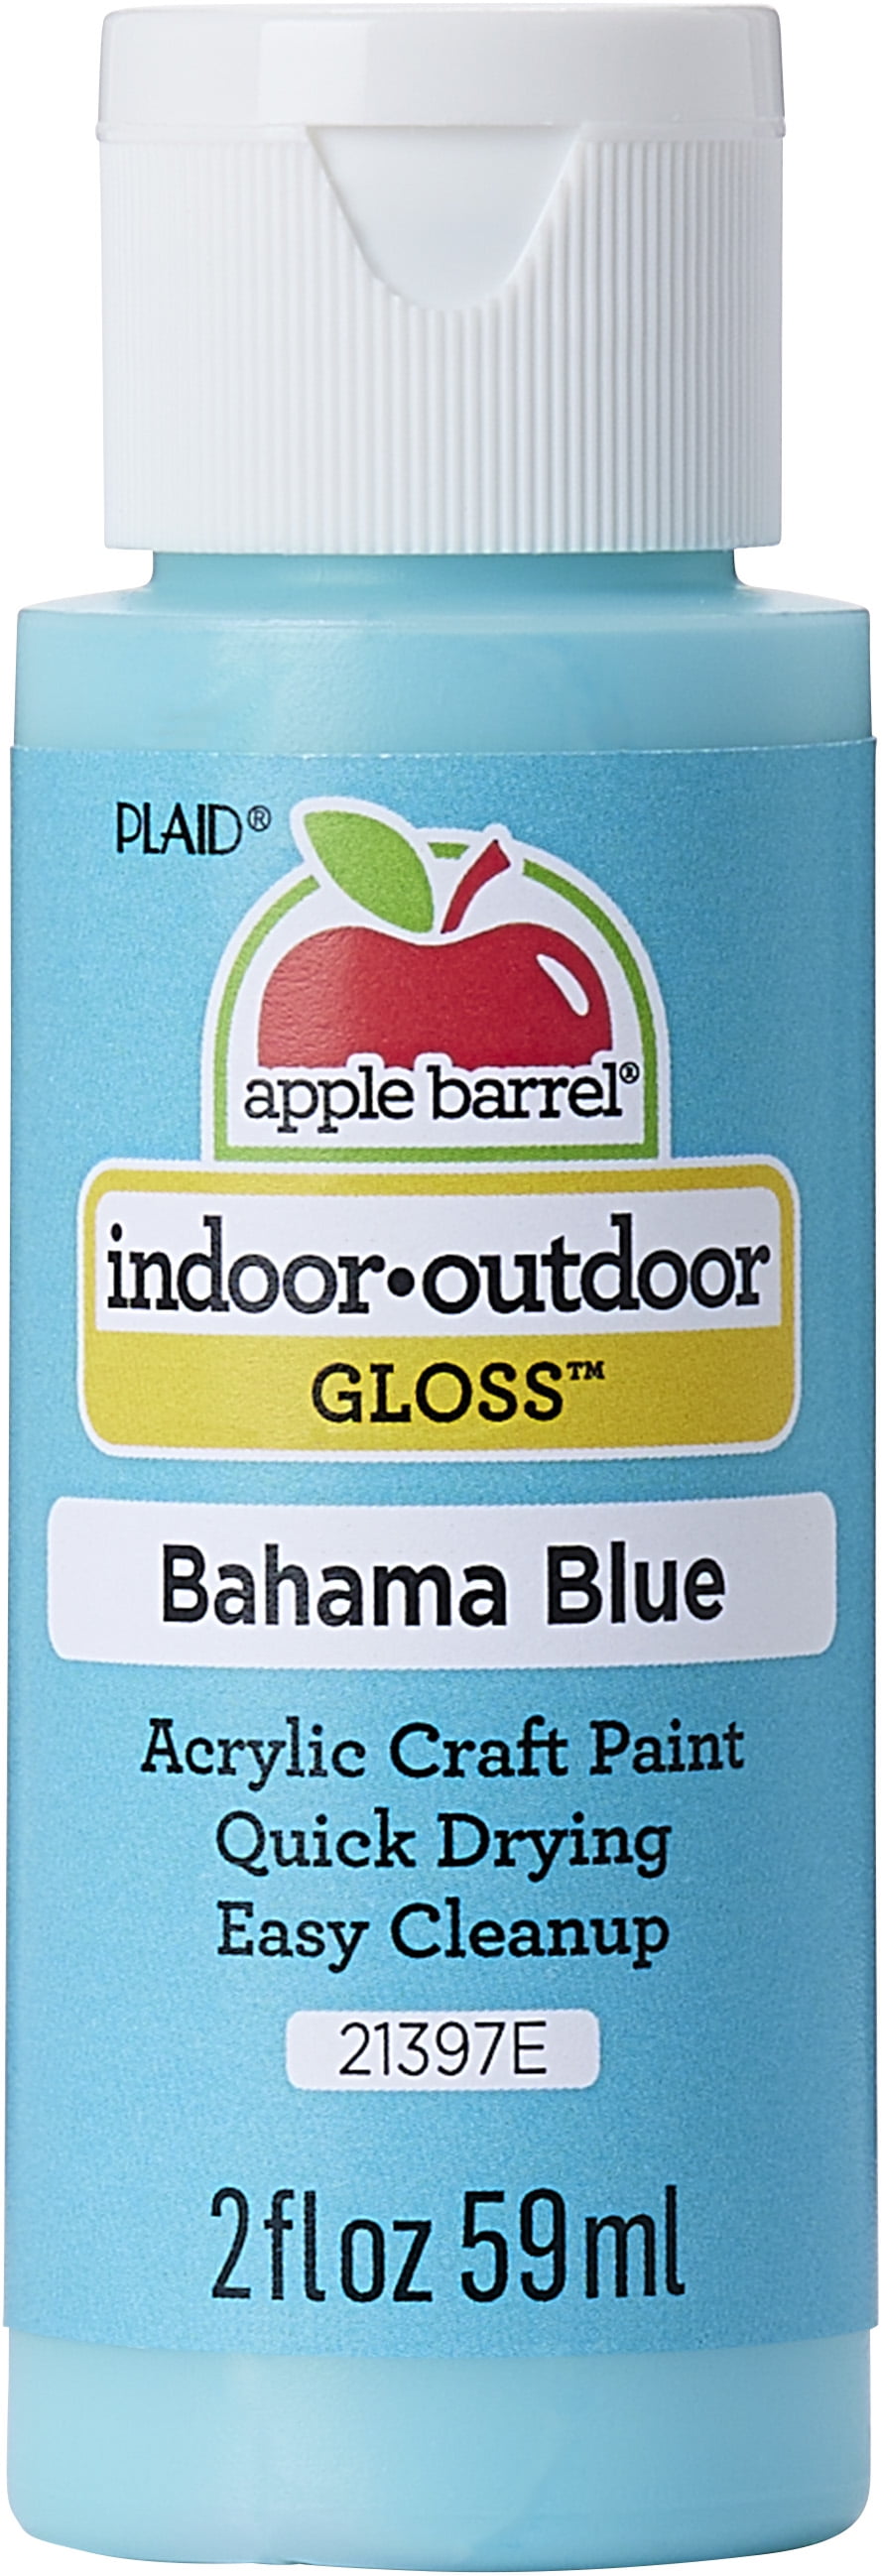 Shop Plaid Apple Barrel ® Gloss™ - Spring Green, 2 oz. - 20652